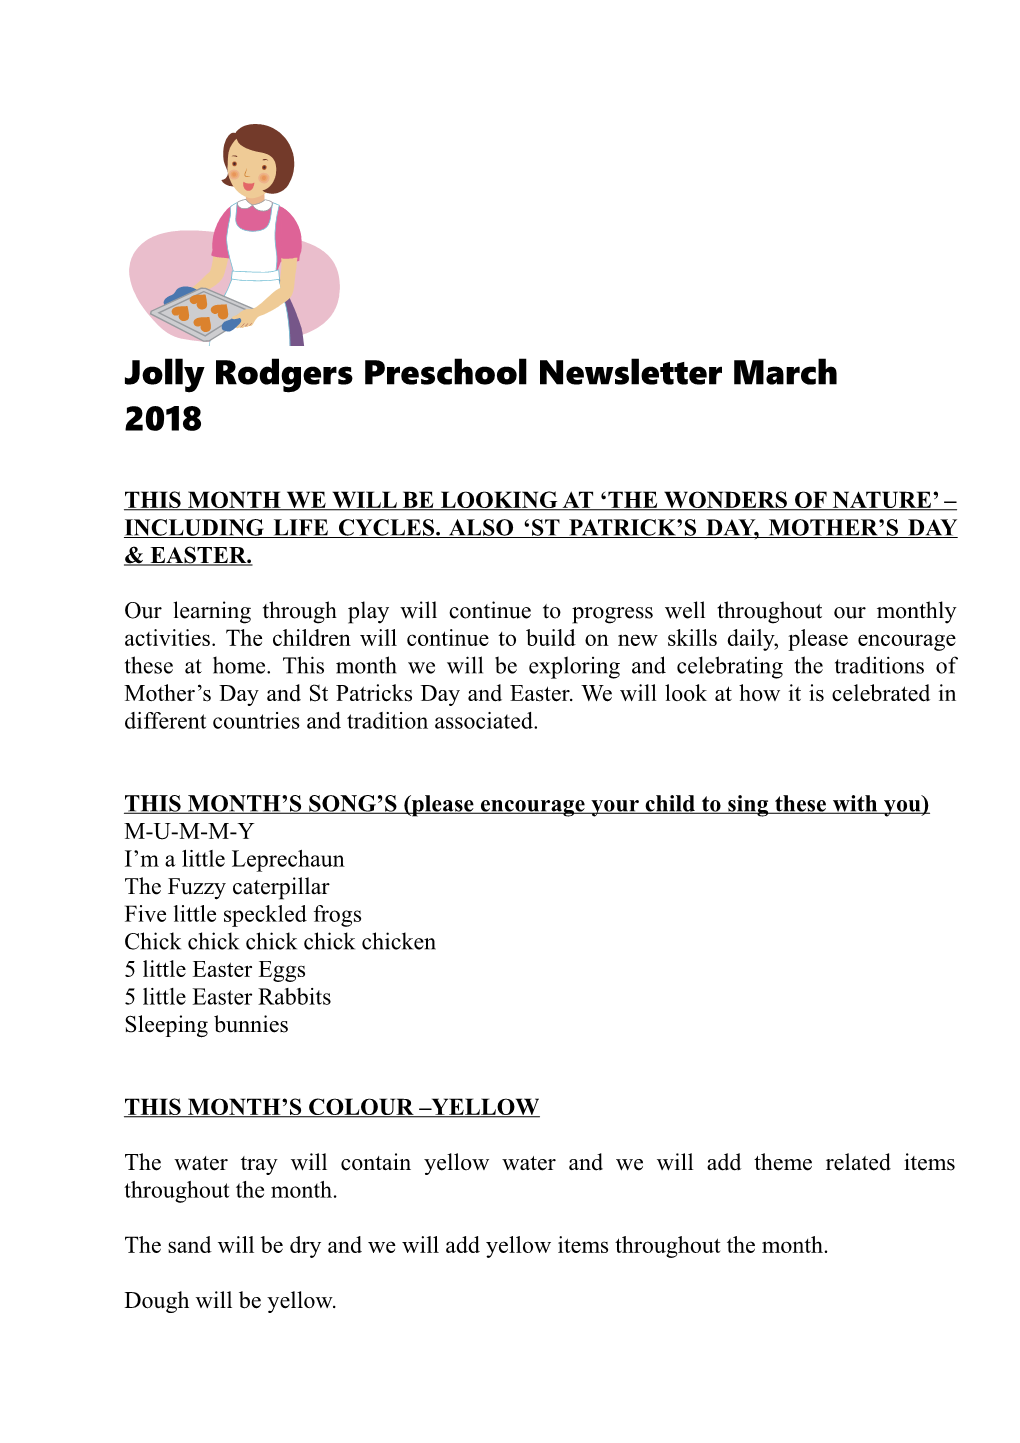 Jolly Rodgers Preschool Newsletter March 2018